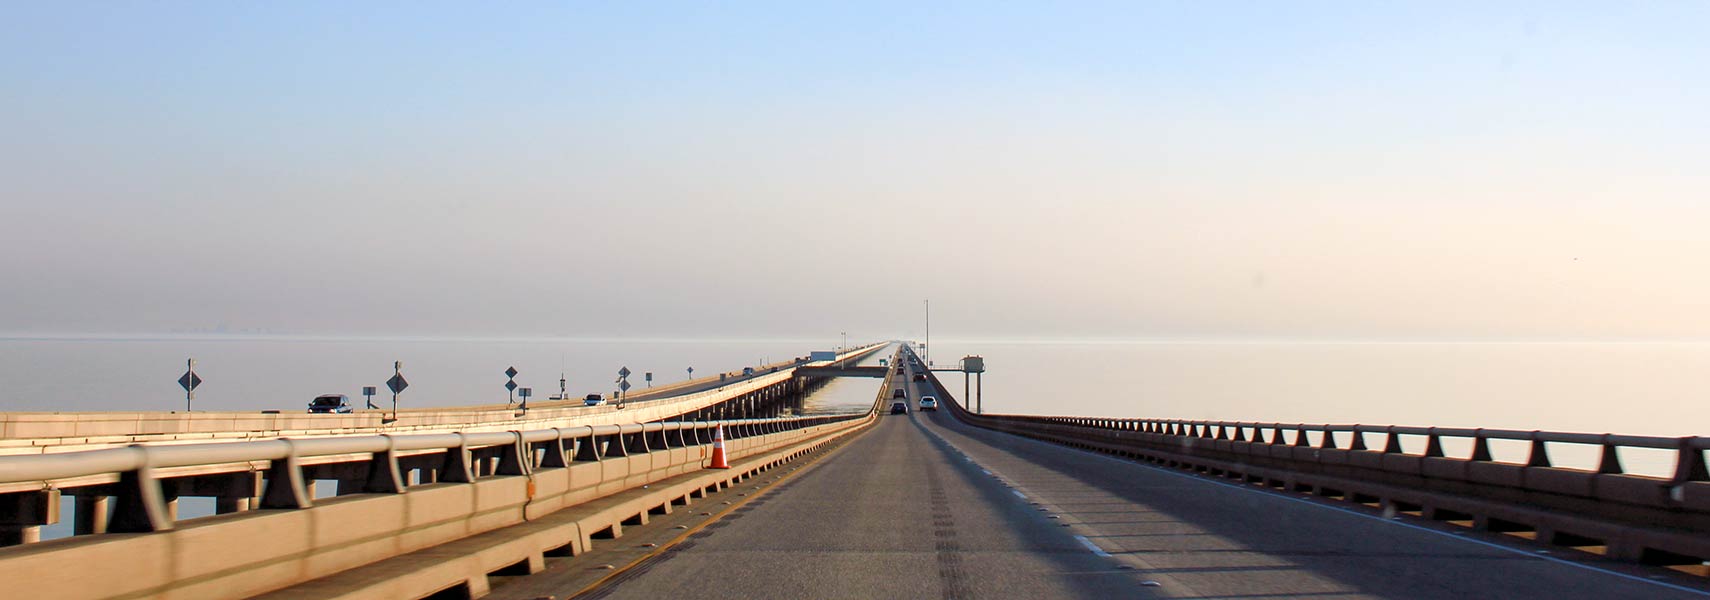 The Maestri Bridge or Lake Pontchartrain Causeway in Louisiana